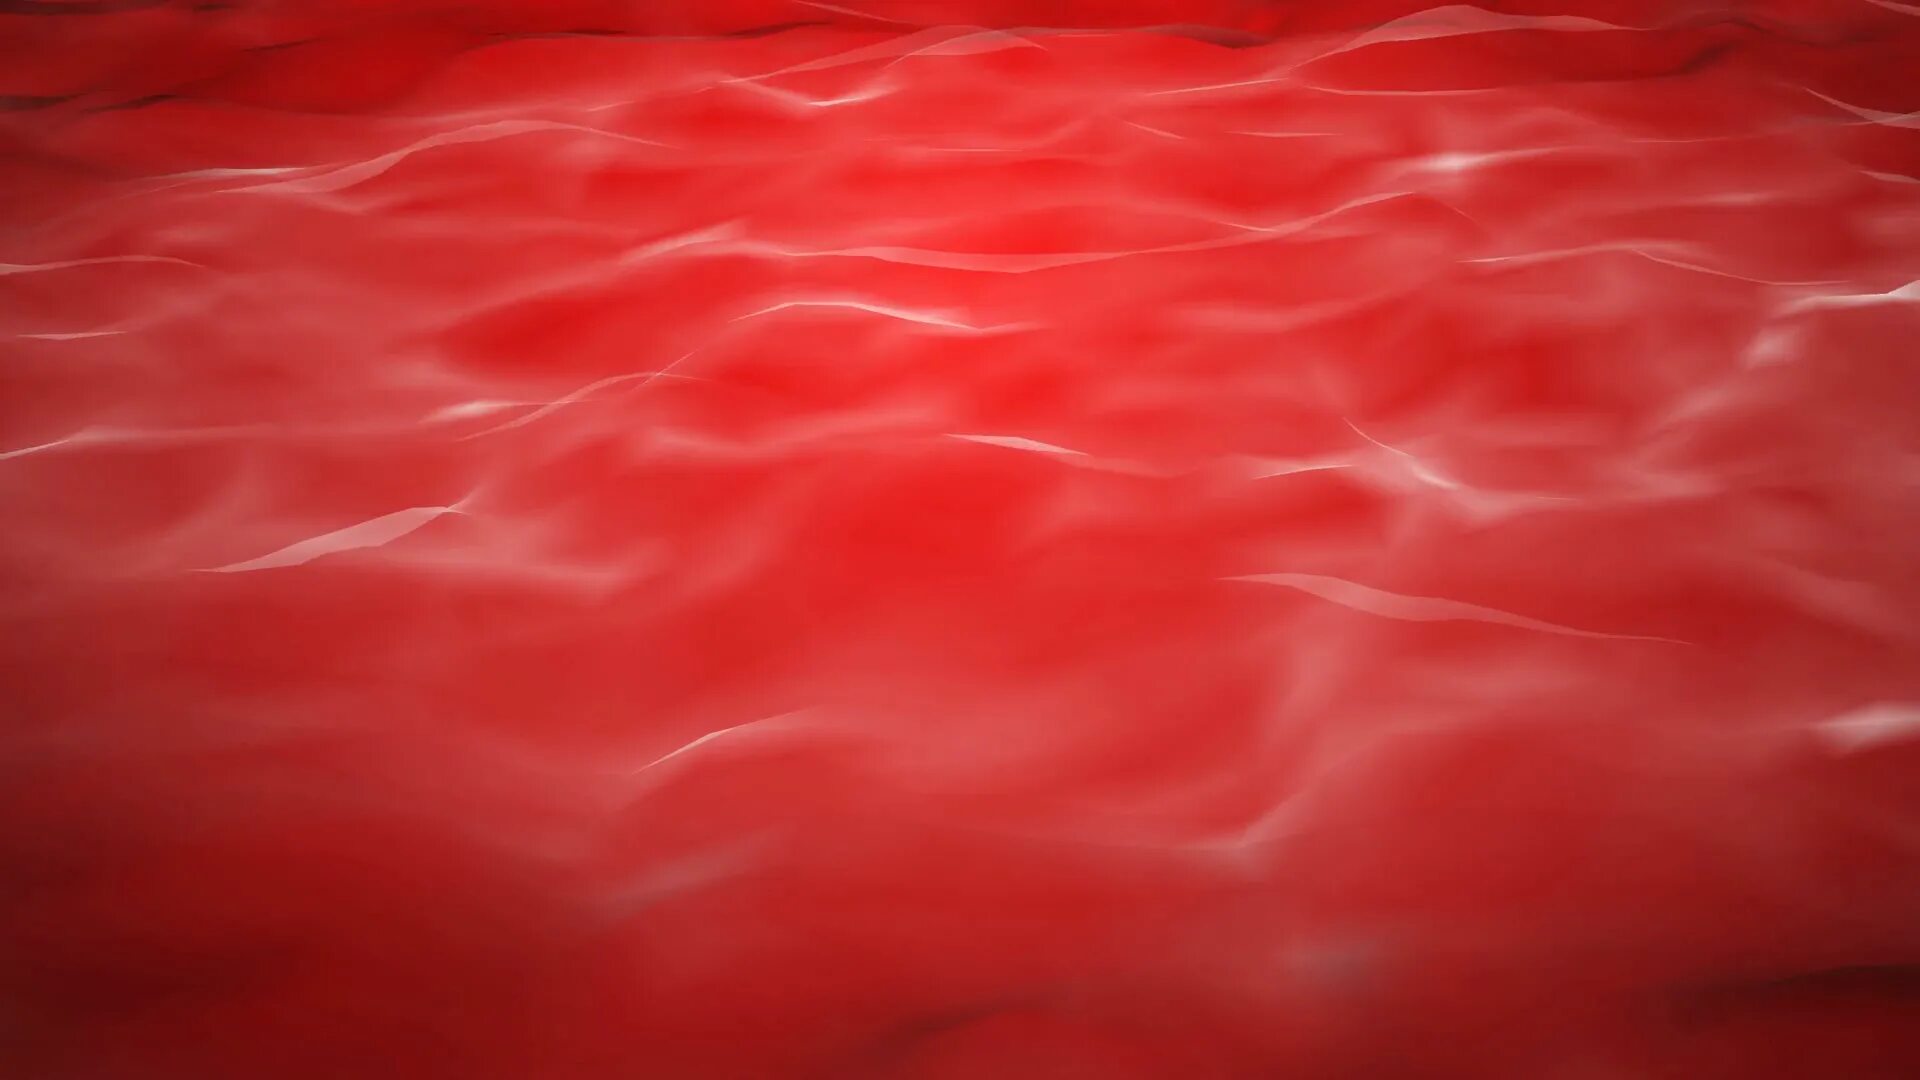 Заказ воды красный. Красная текстура. Красная вода. Красный фон. Красивый красный фон.